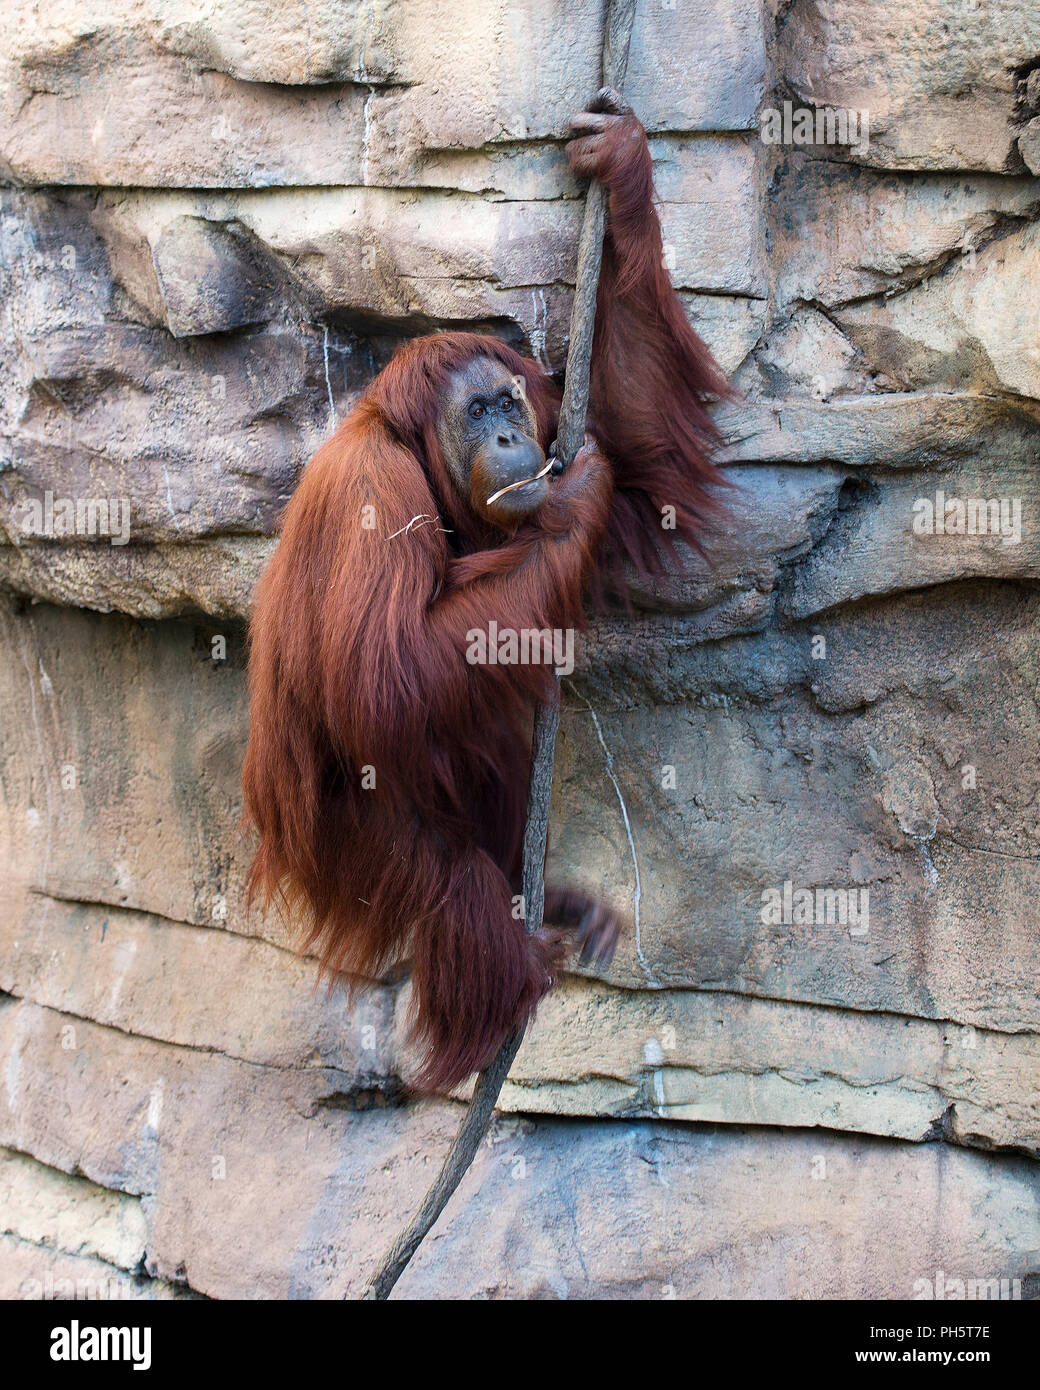 Orangutan monkey climbing on rope enjoying the day Stock Photo - Alamy